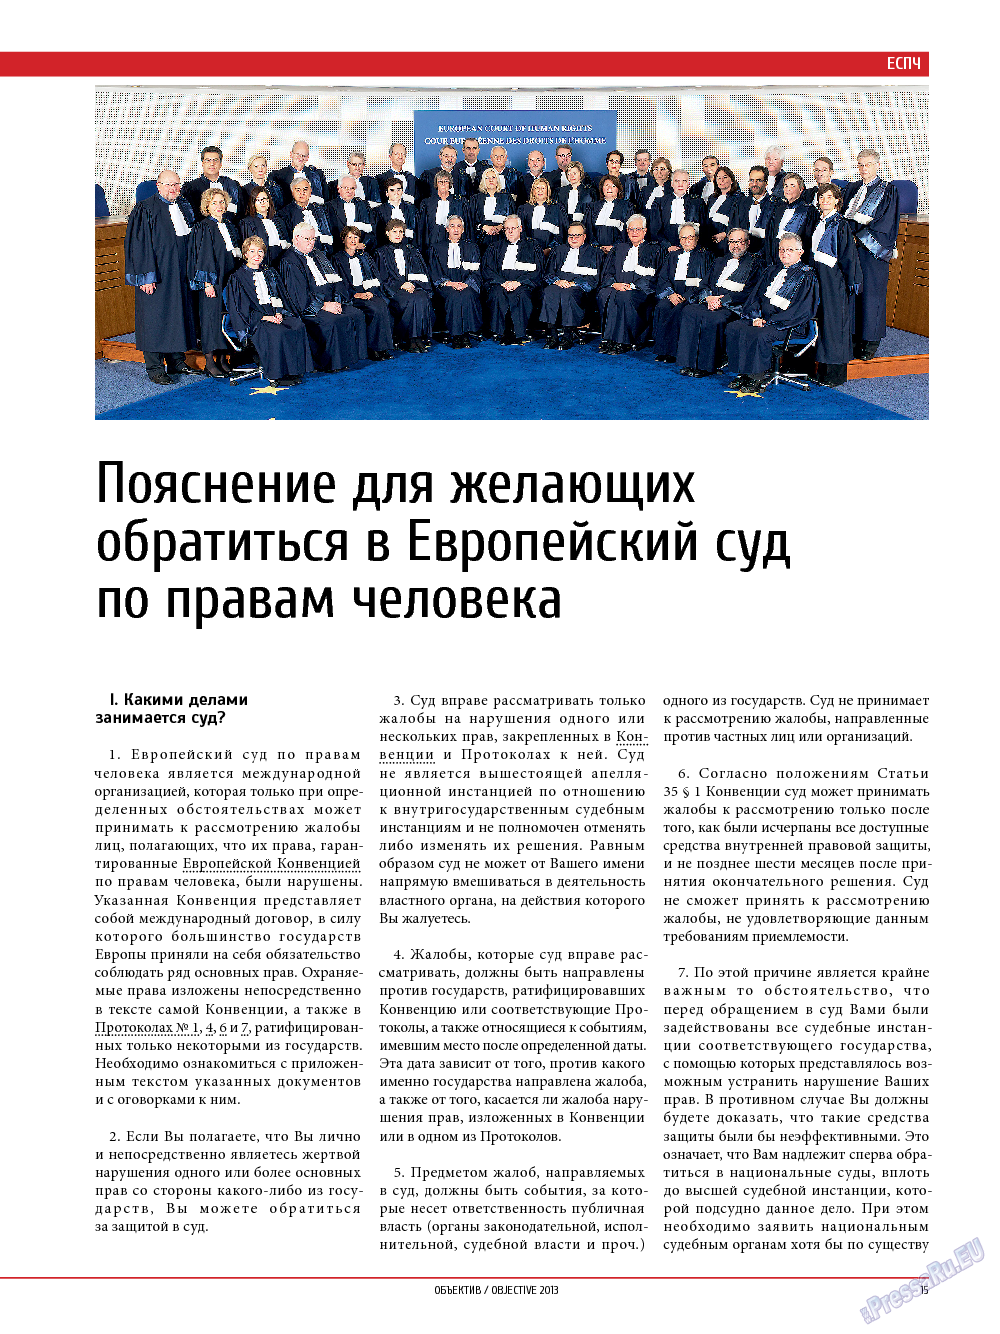 Объектив EU, журнал. 2013 №4 стр.15